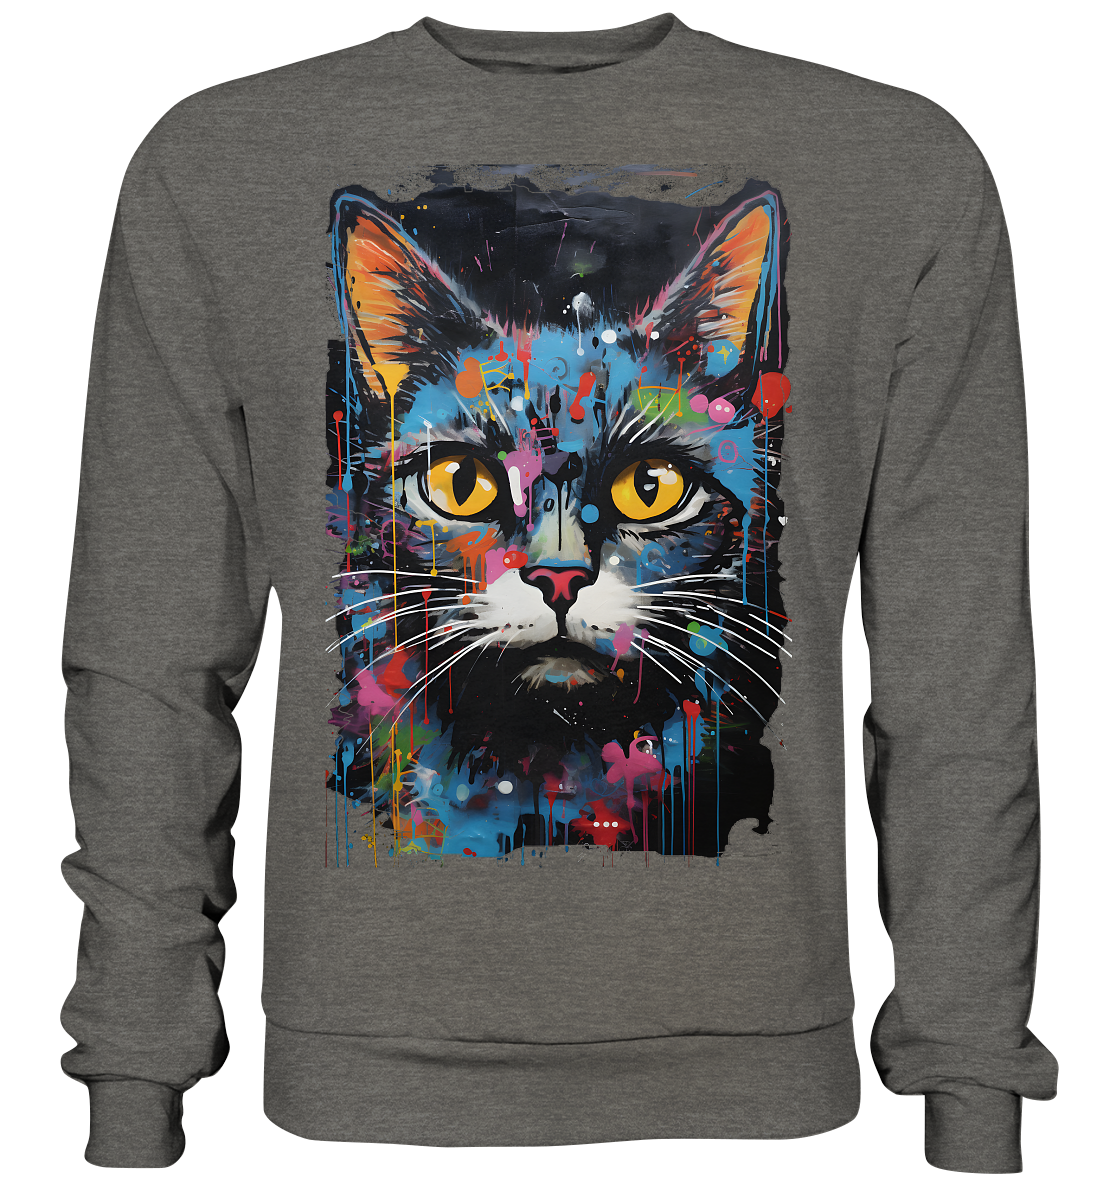 Graffiti Unisex Sweatshirt - Cat 1 - Sinjenvibes